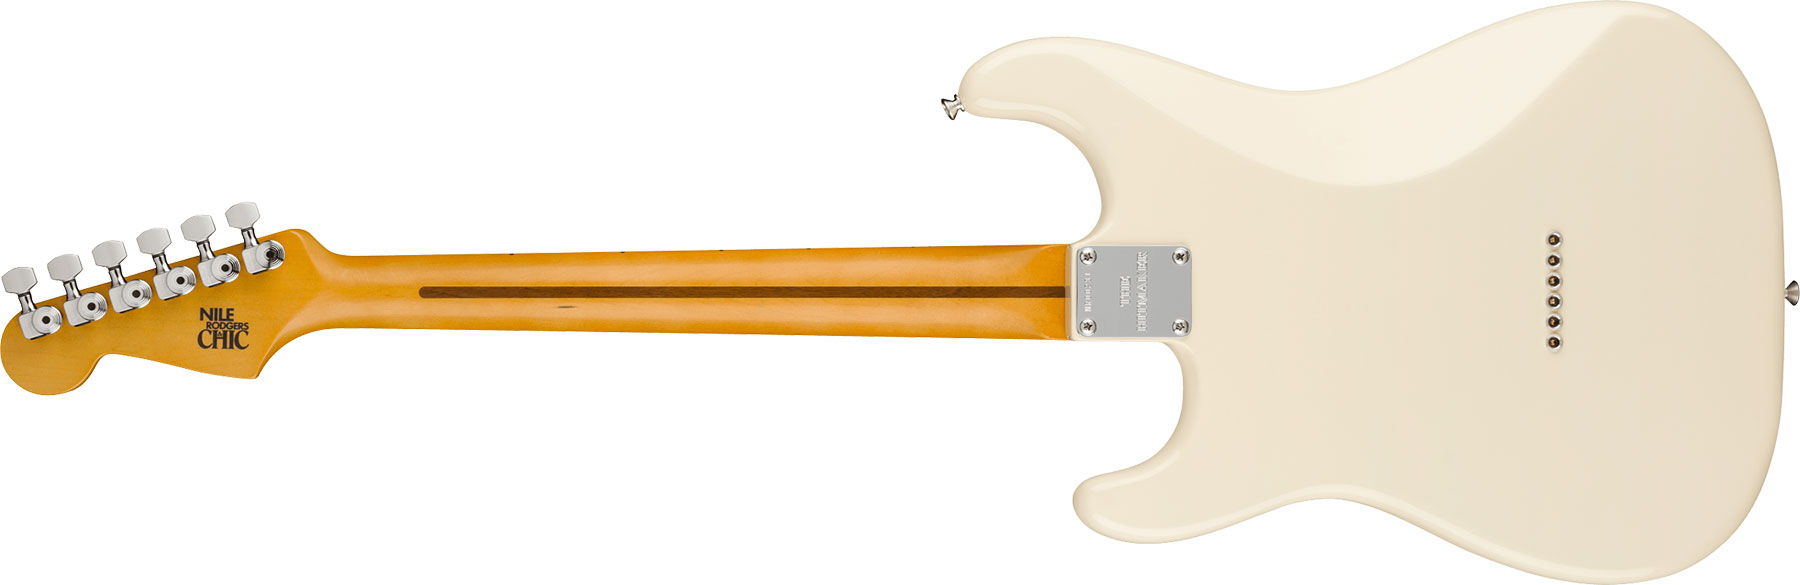 Fender Nile Rodgers Strat Hitmaker Usa Signature 3s Ht Mn - Olympic White - Guitarra eléctrica con forma de str. - Variation 1